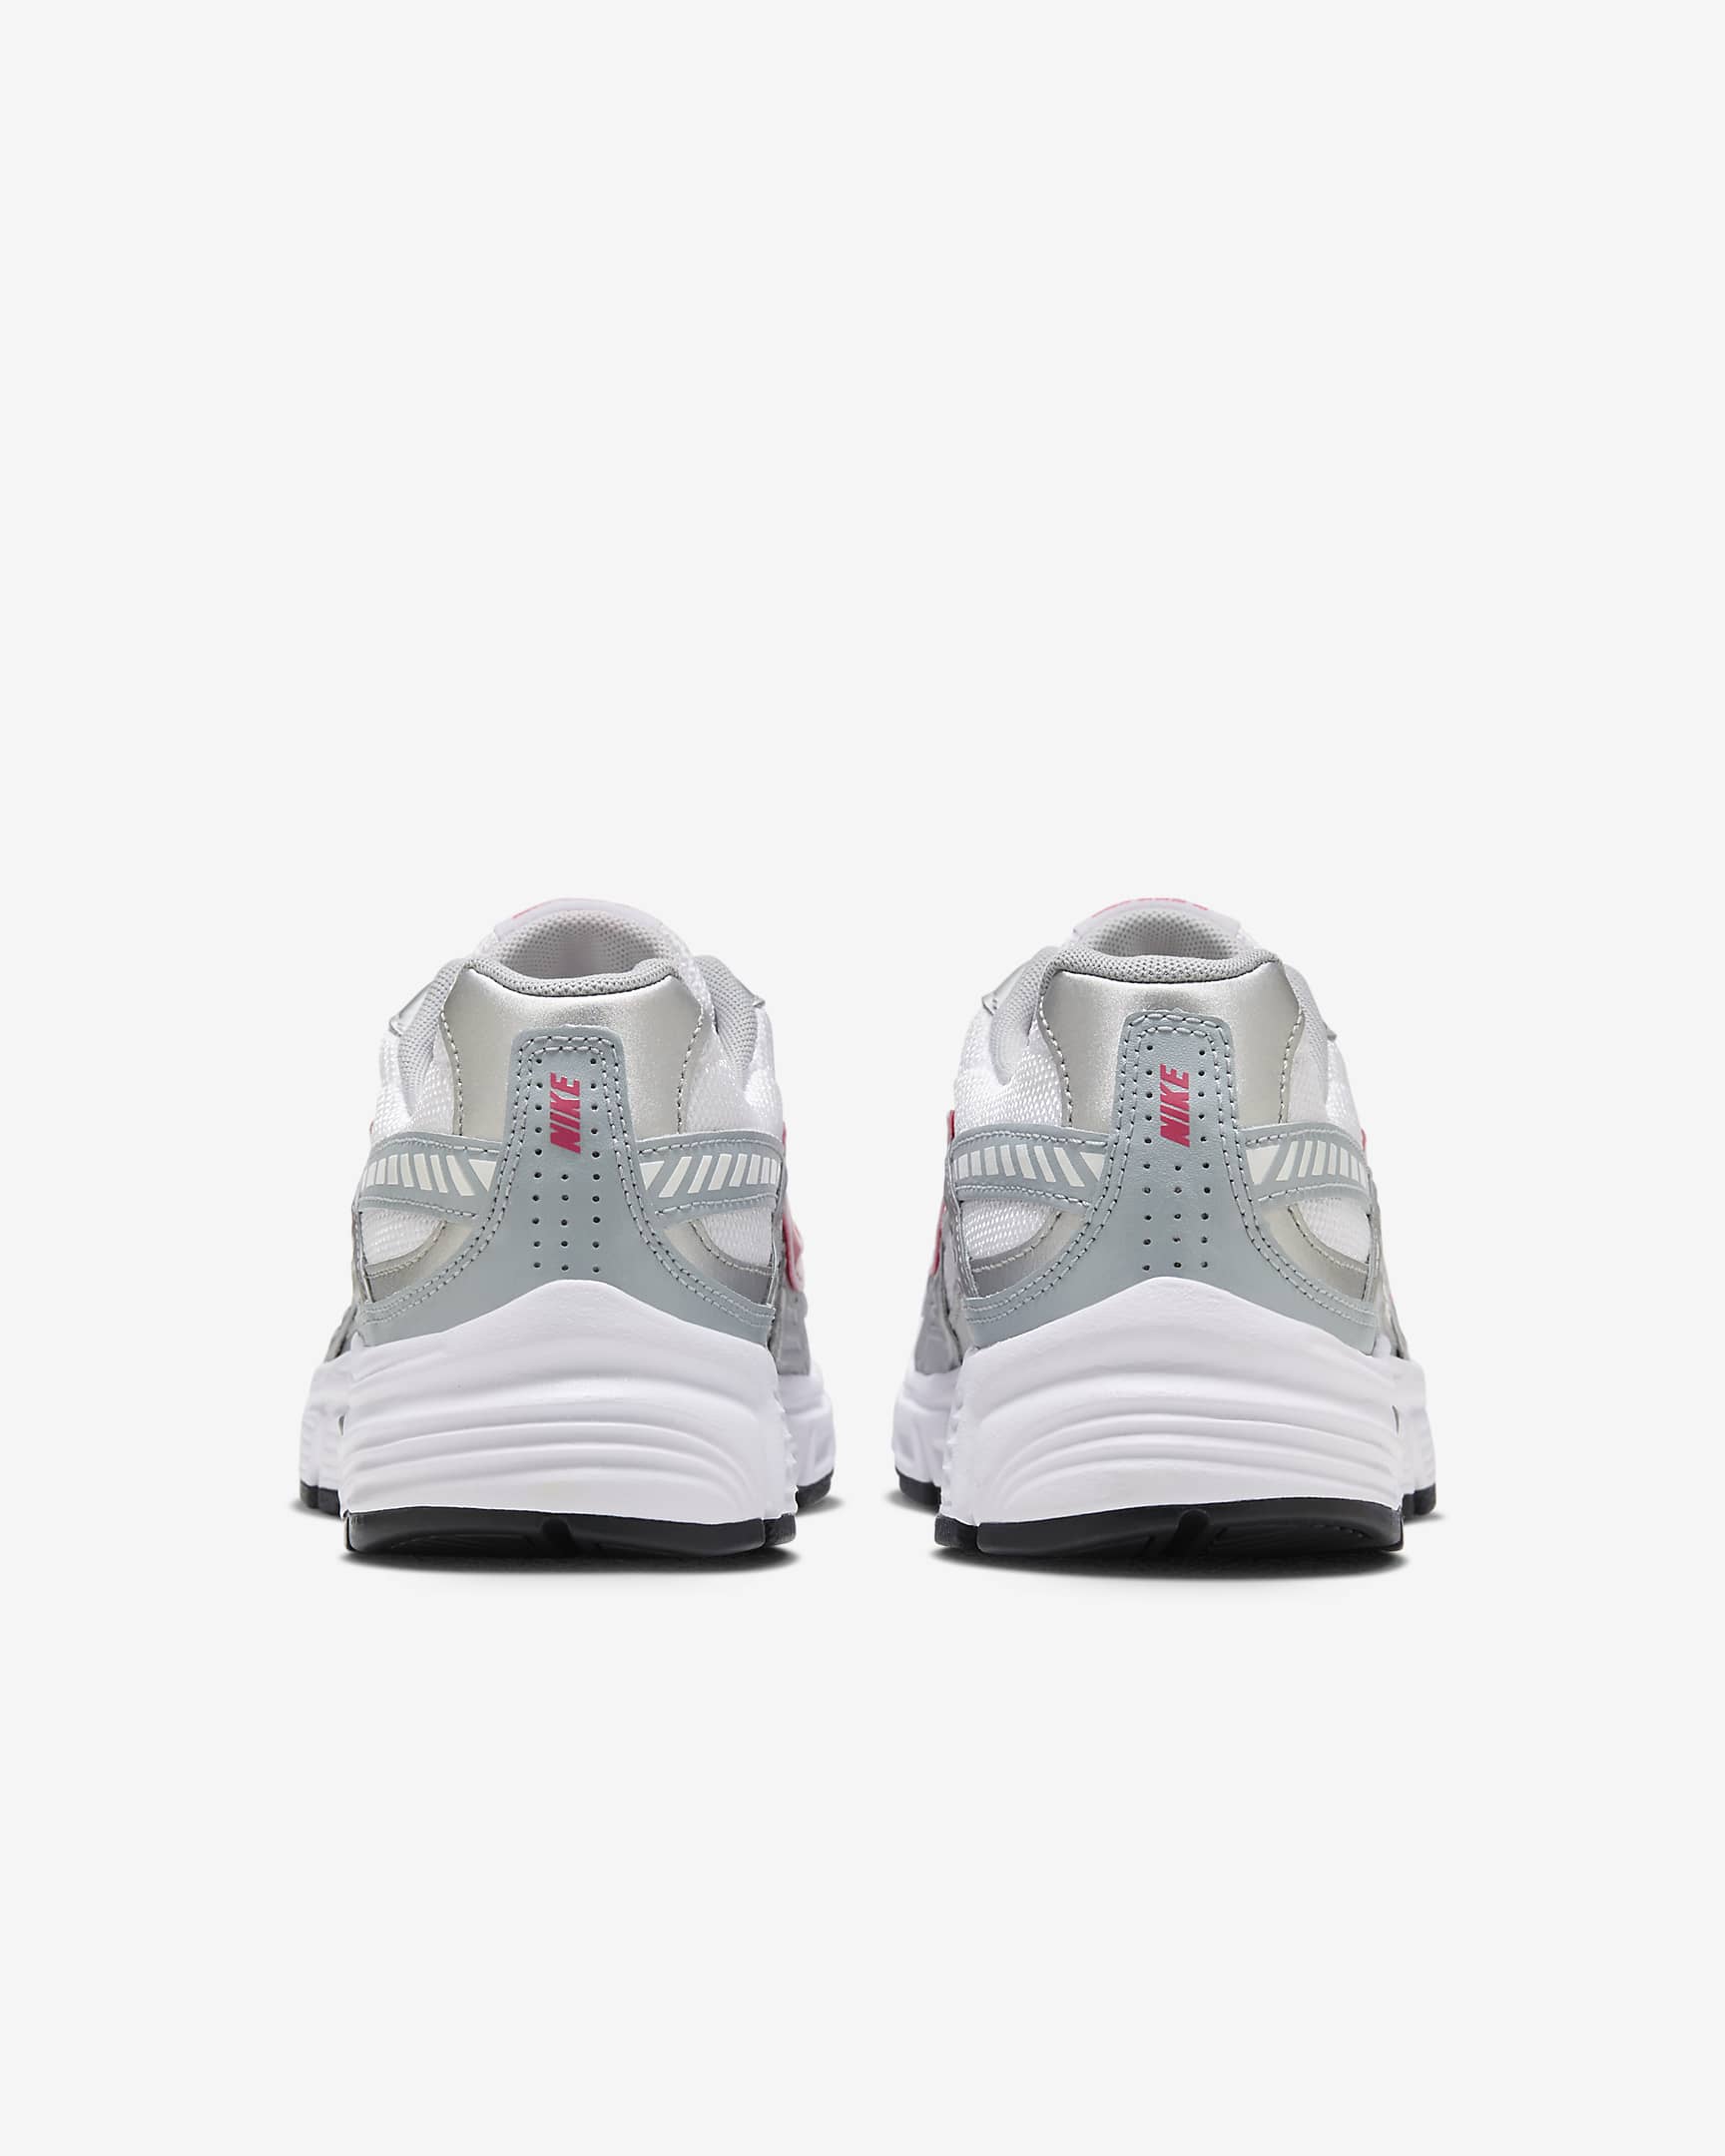 Chaussure Nike Initiator pour femme - Blanc/Metallic Silver/Mist Blue/Cherry